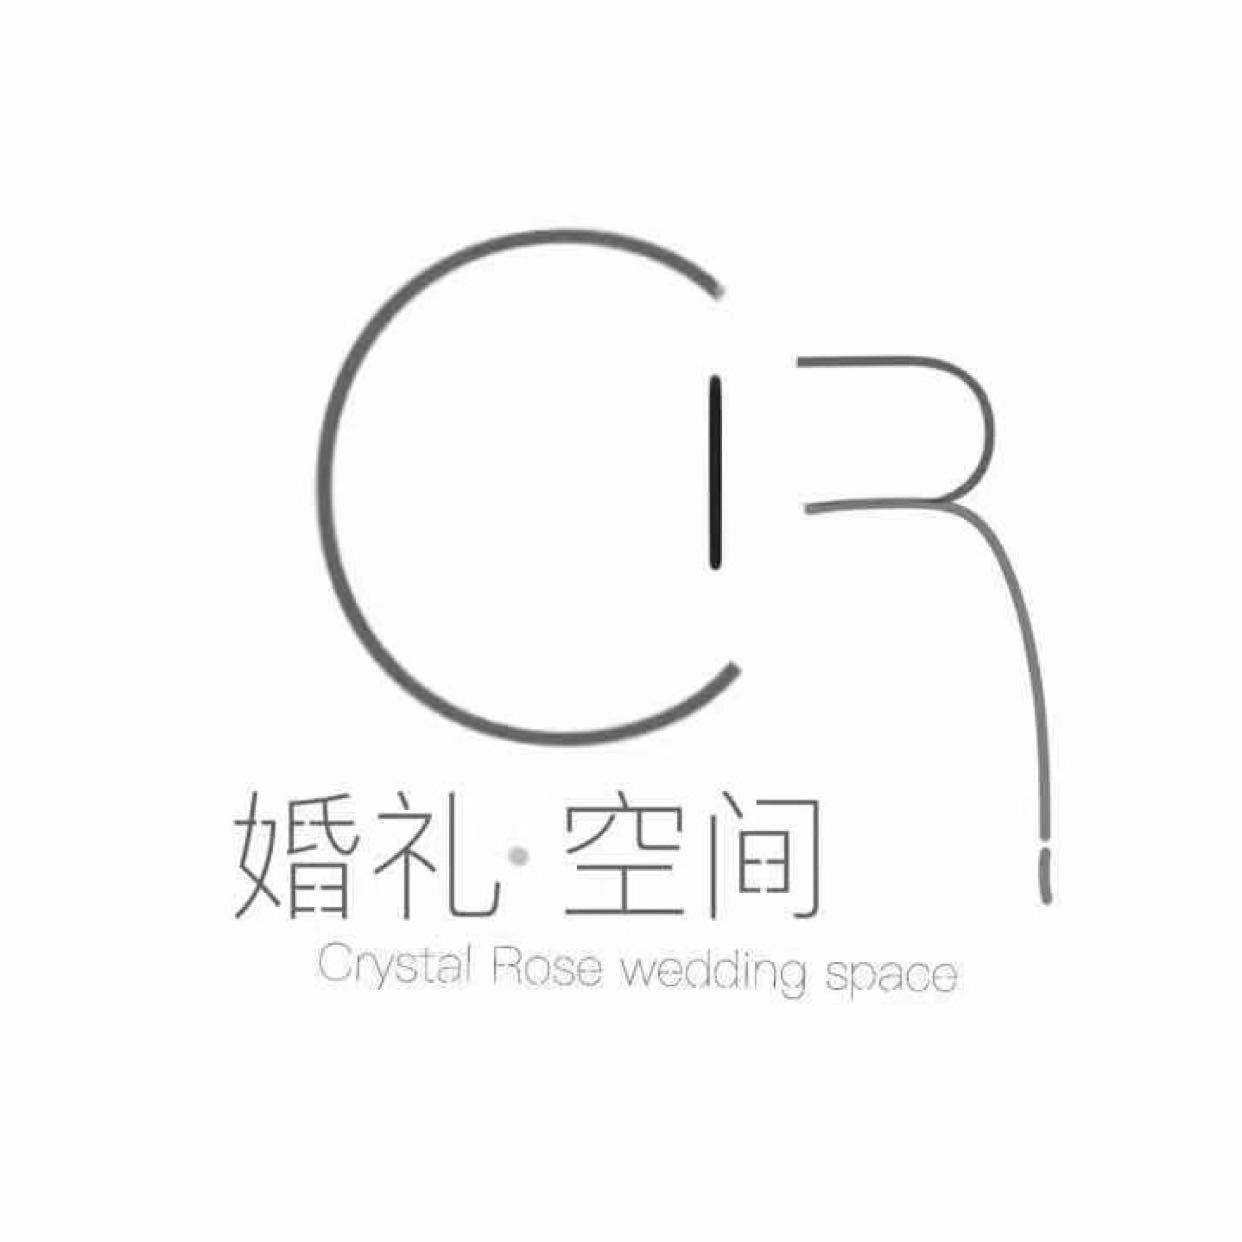 CR婚礼·空间